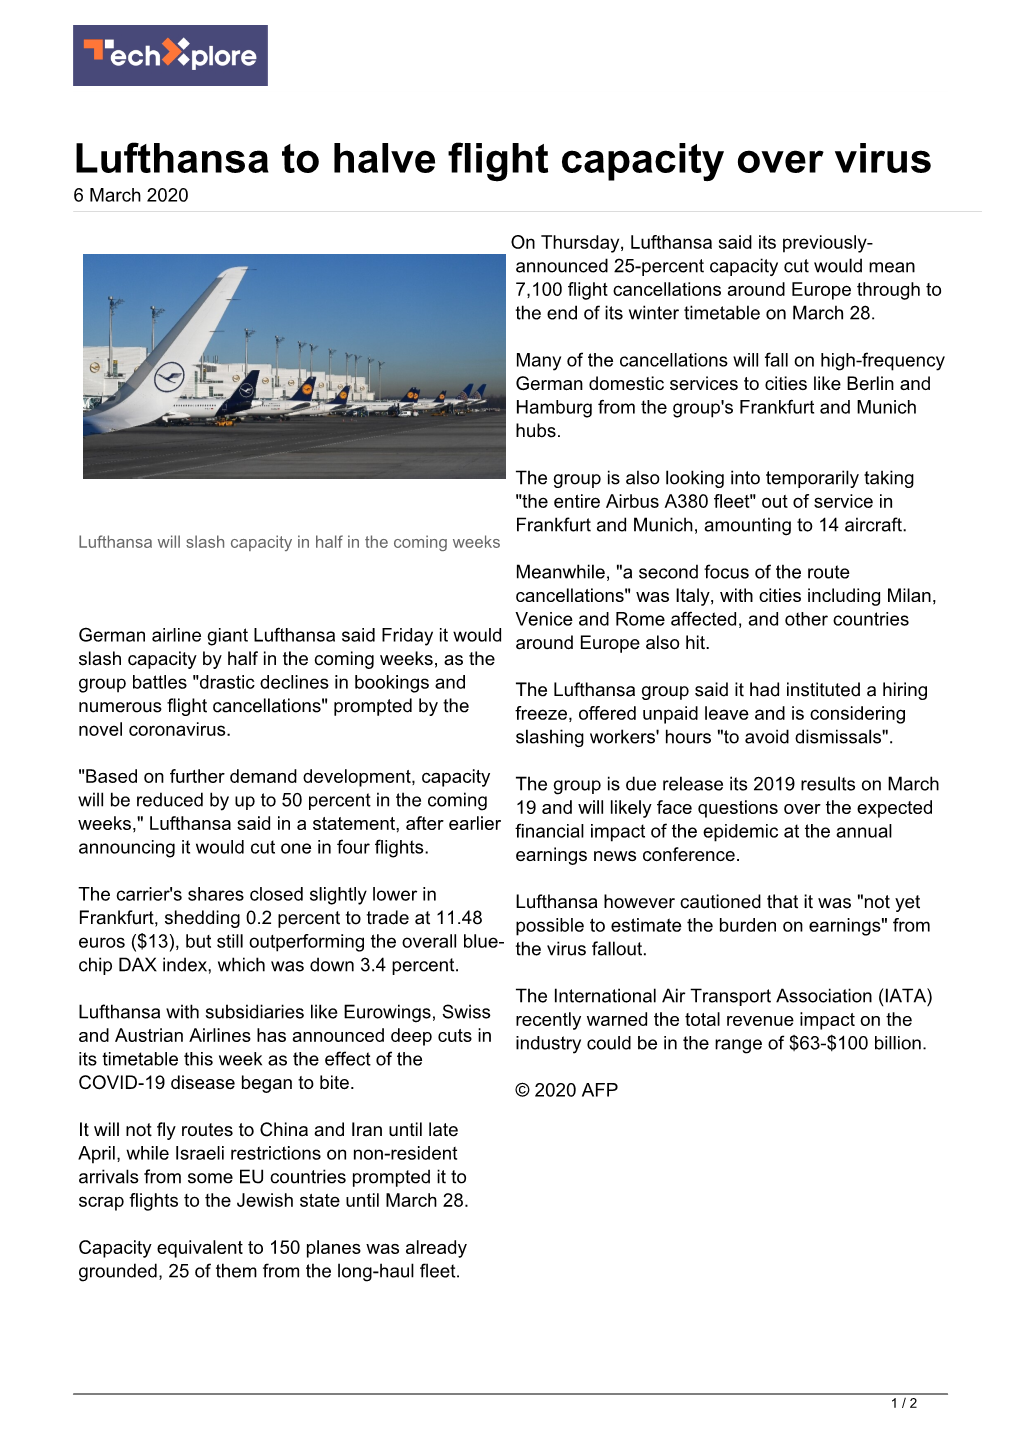 Lufthansa to Halve Flight Capacity Over Virus 6 March 2020